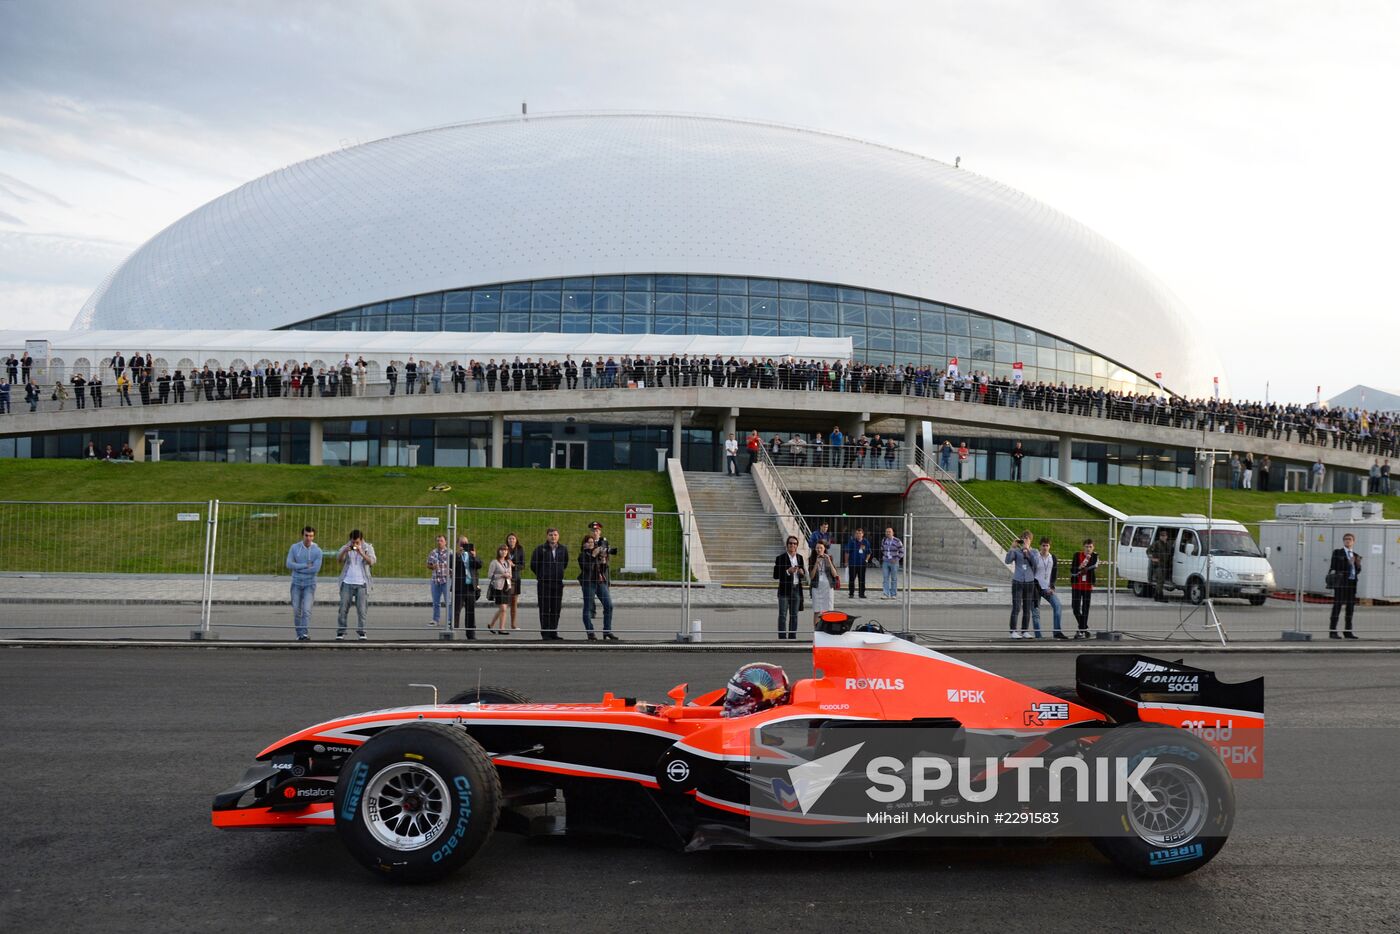 Formula Sochi 2013 motorsport show